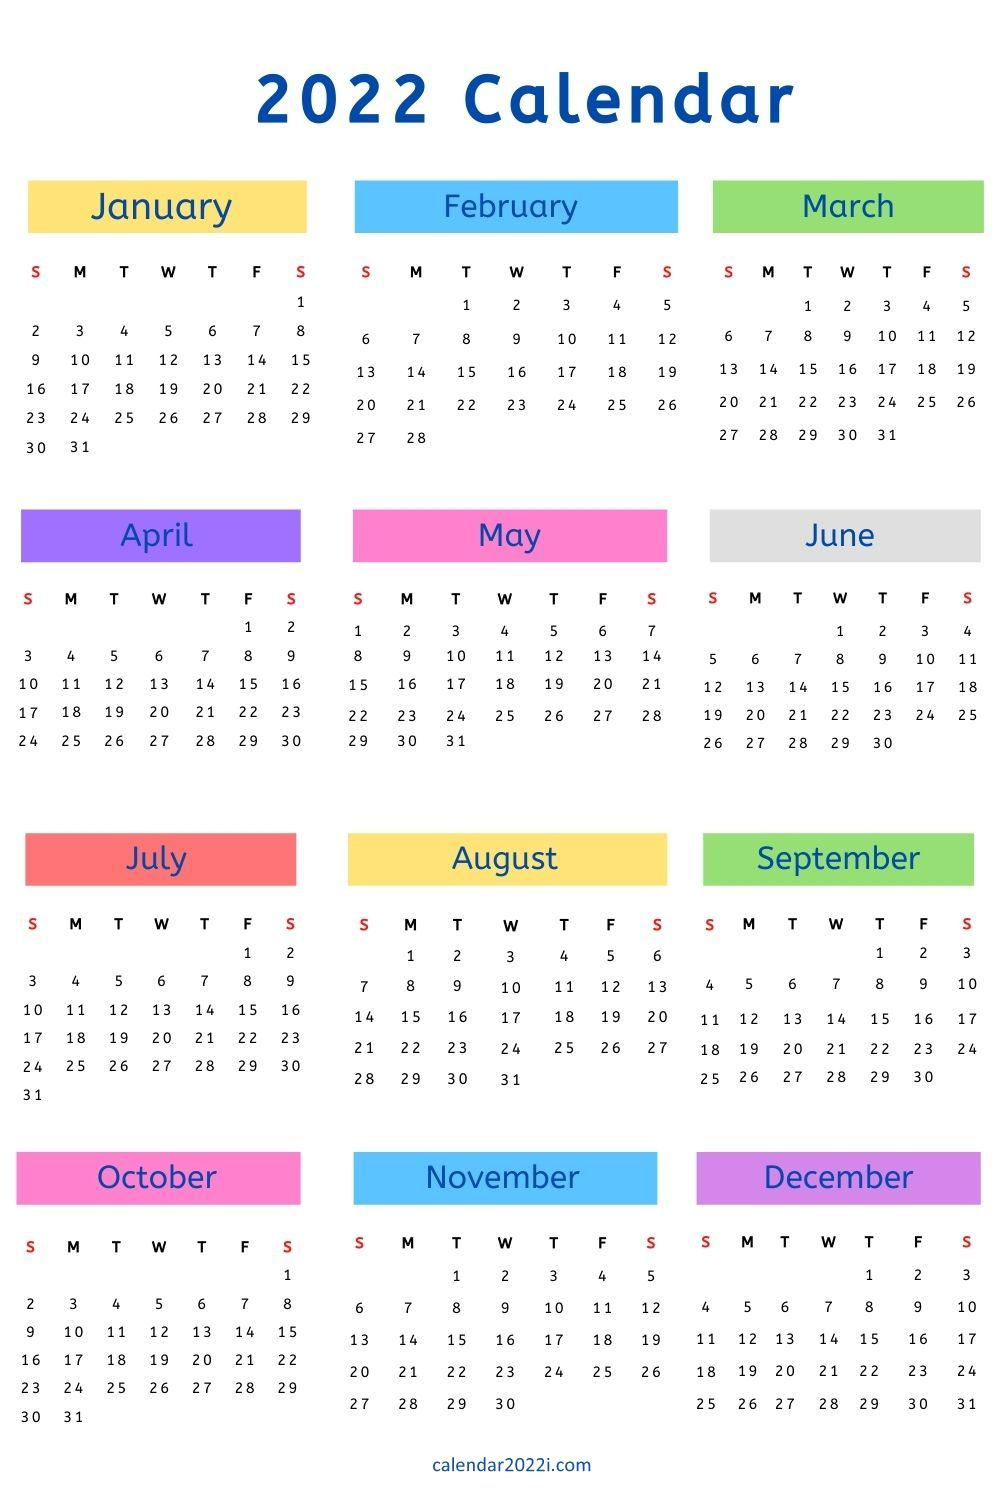 Free 2022 Calendar - Calendar 2022